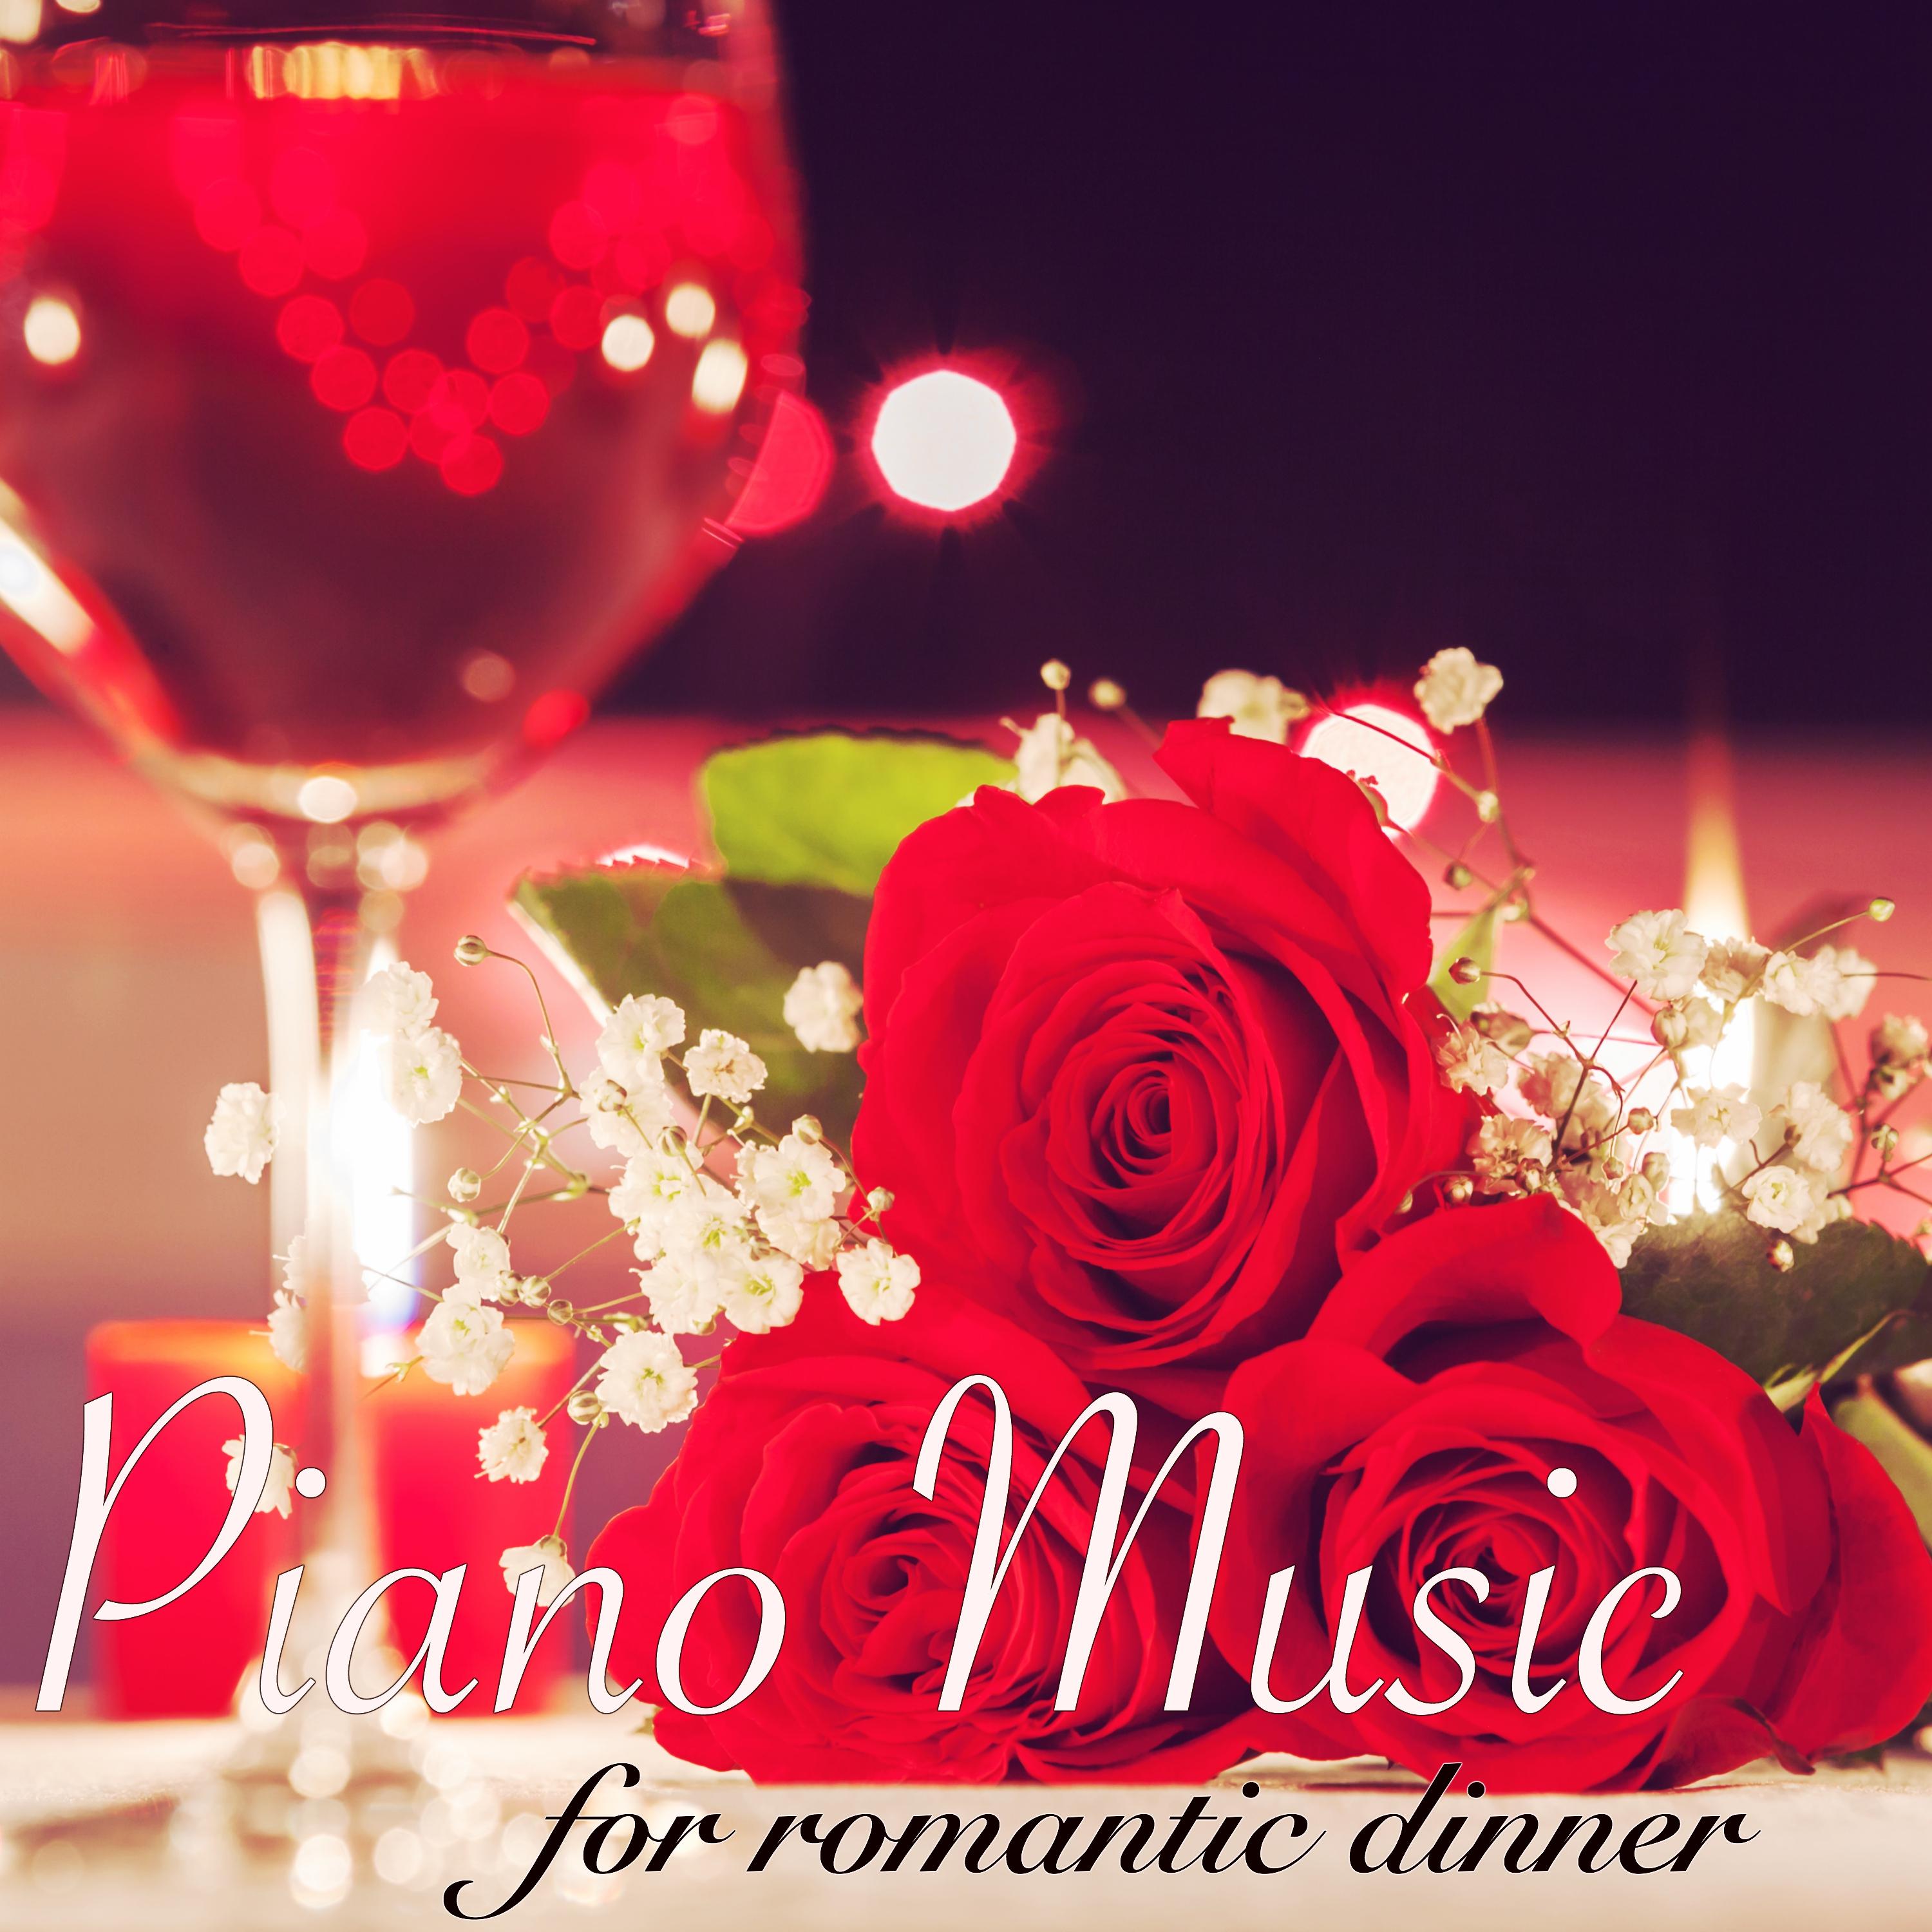 True Love - Romantic songs